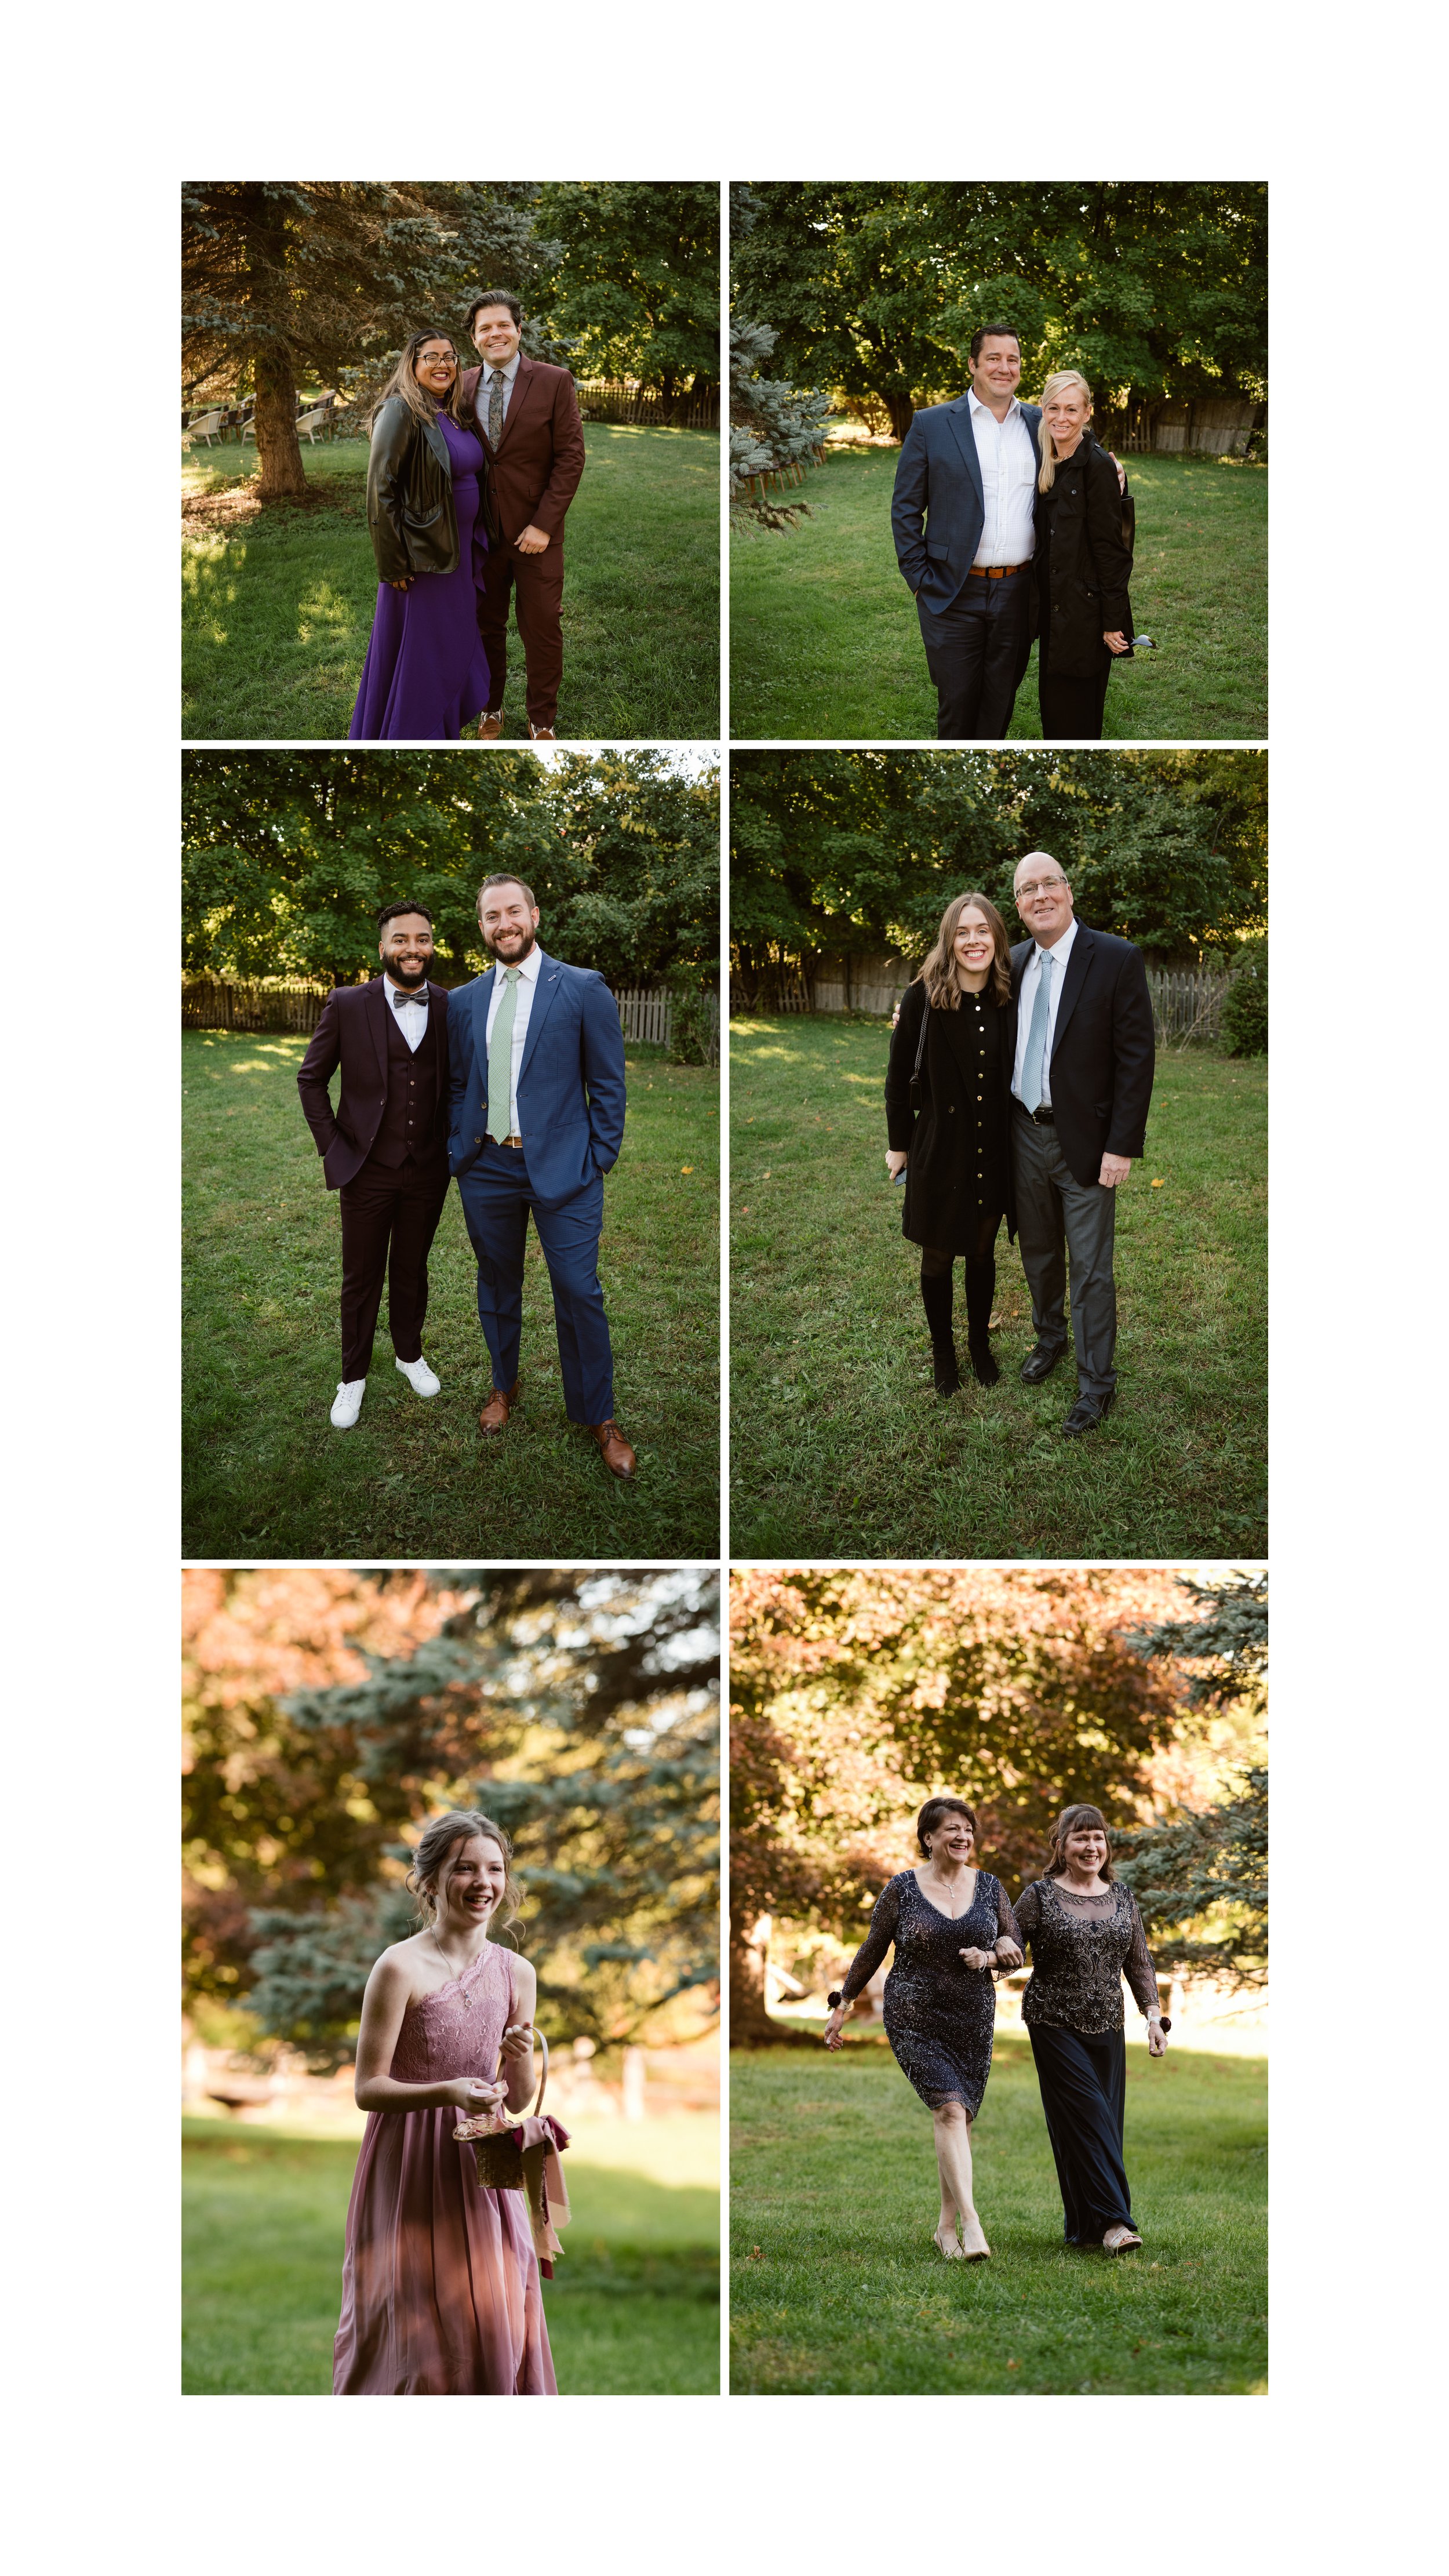 Vanderbilt_Lakeside_Inn_Wedding_photography_fall_wedding_photographer_upstate_NY_Novella_paulette_griswold00009.jpg